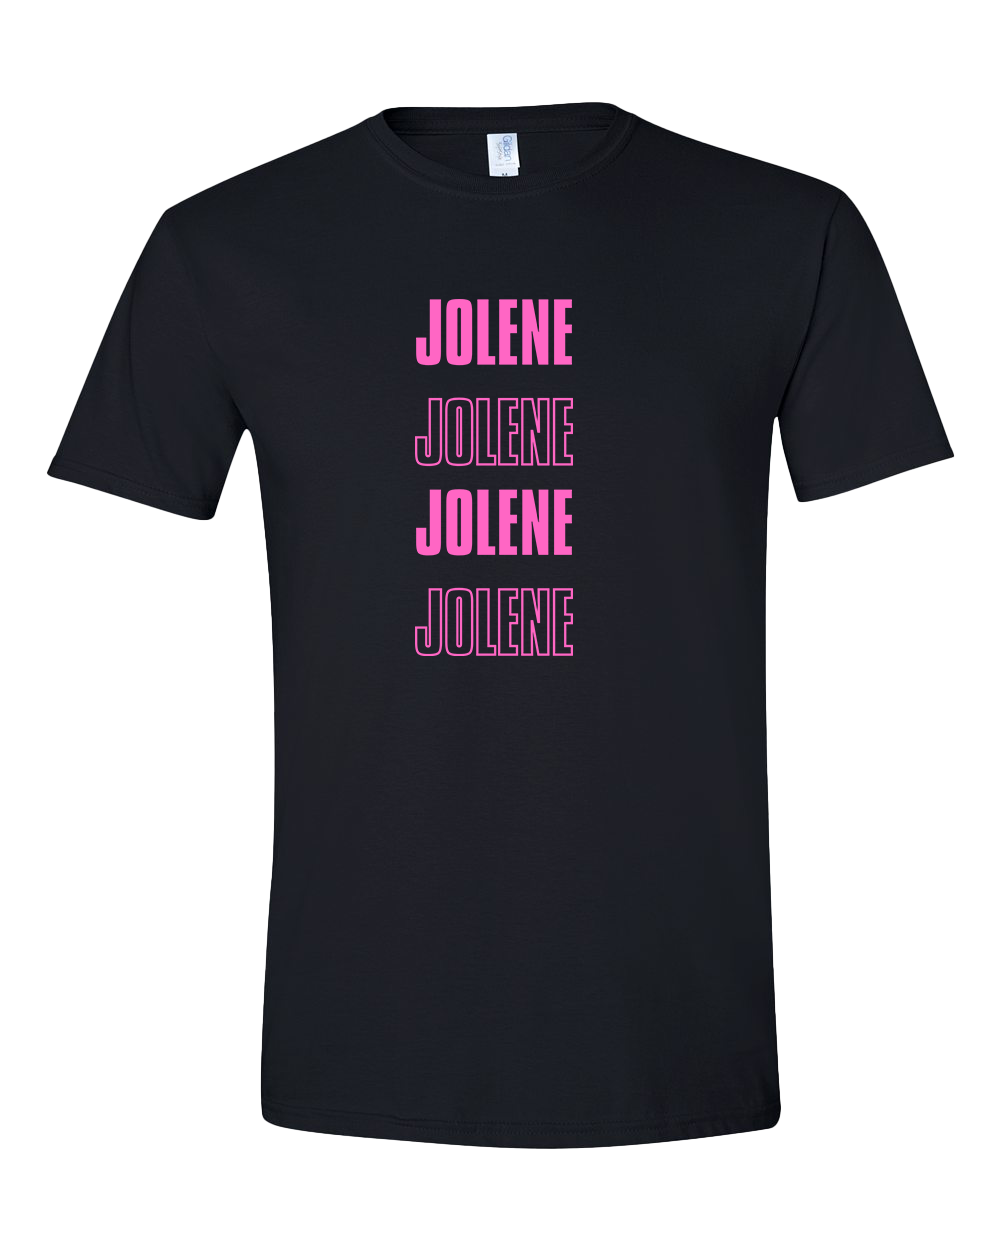 JOLENE Tshirt - Multiple Colors